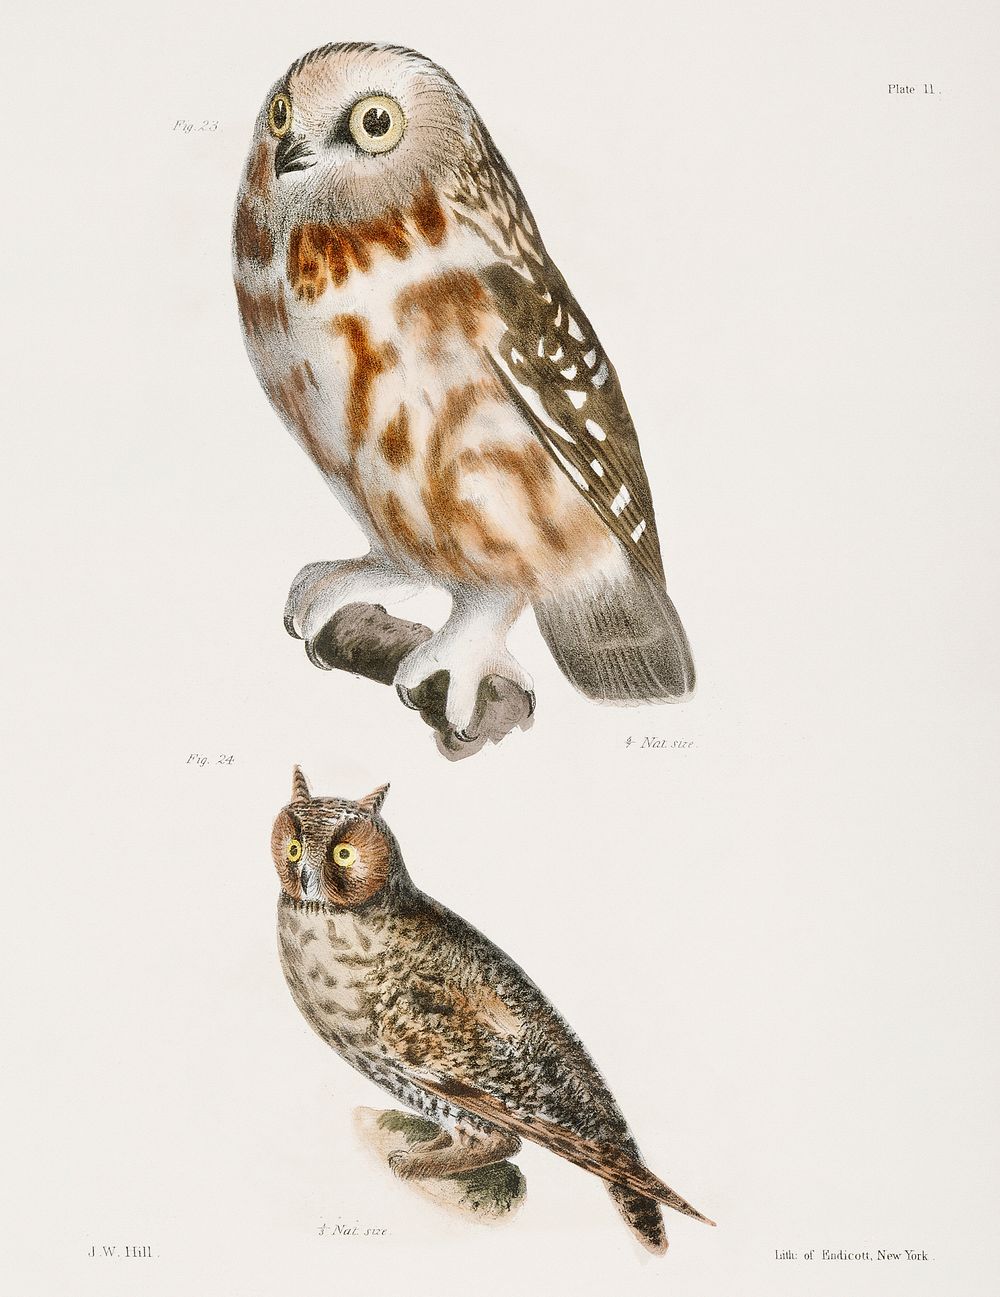 23. The Acadian Owl (Ulula acadica) 24. The Long-eared Owl (Otus americanus) illustration from Zoology of New York…